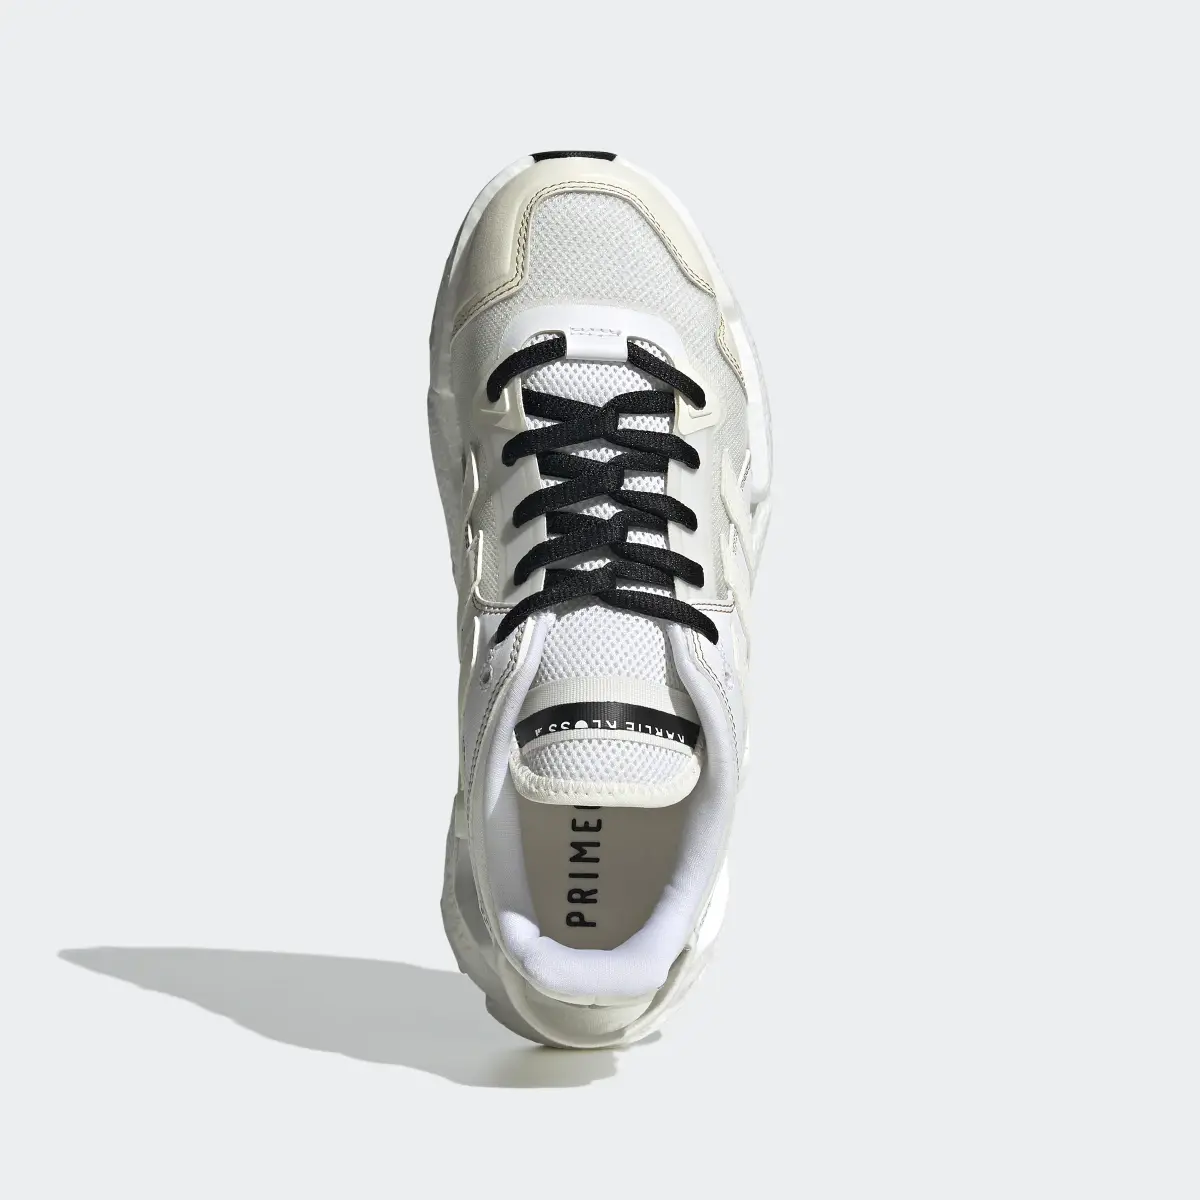 Adidas Karlie Kloss X9000 Shoes. 3